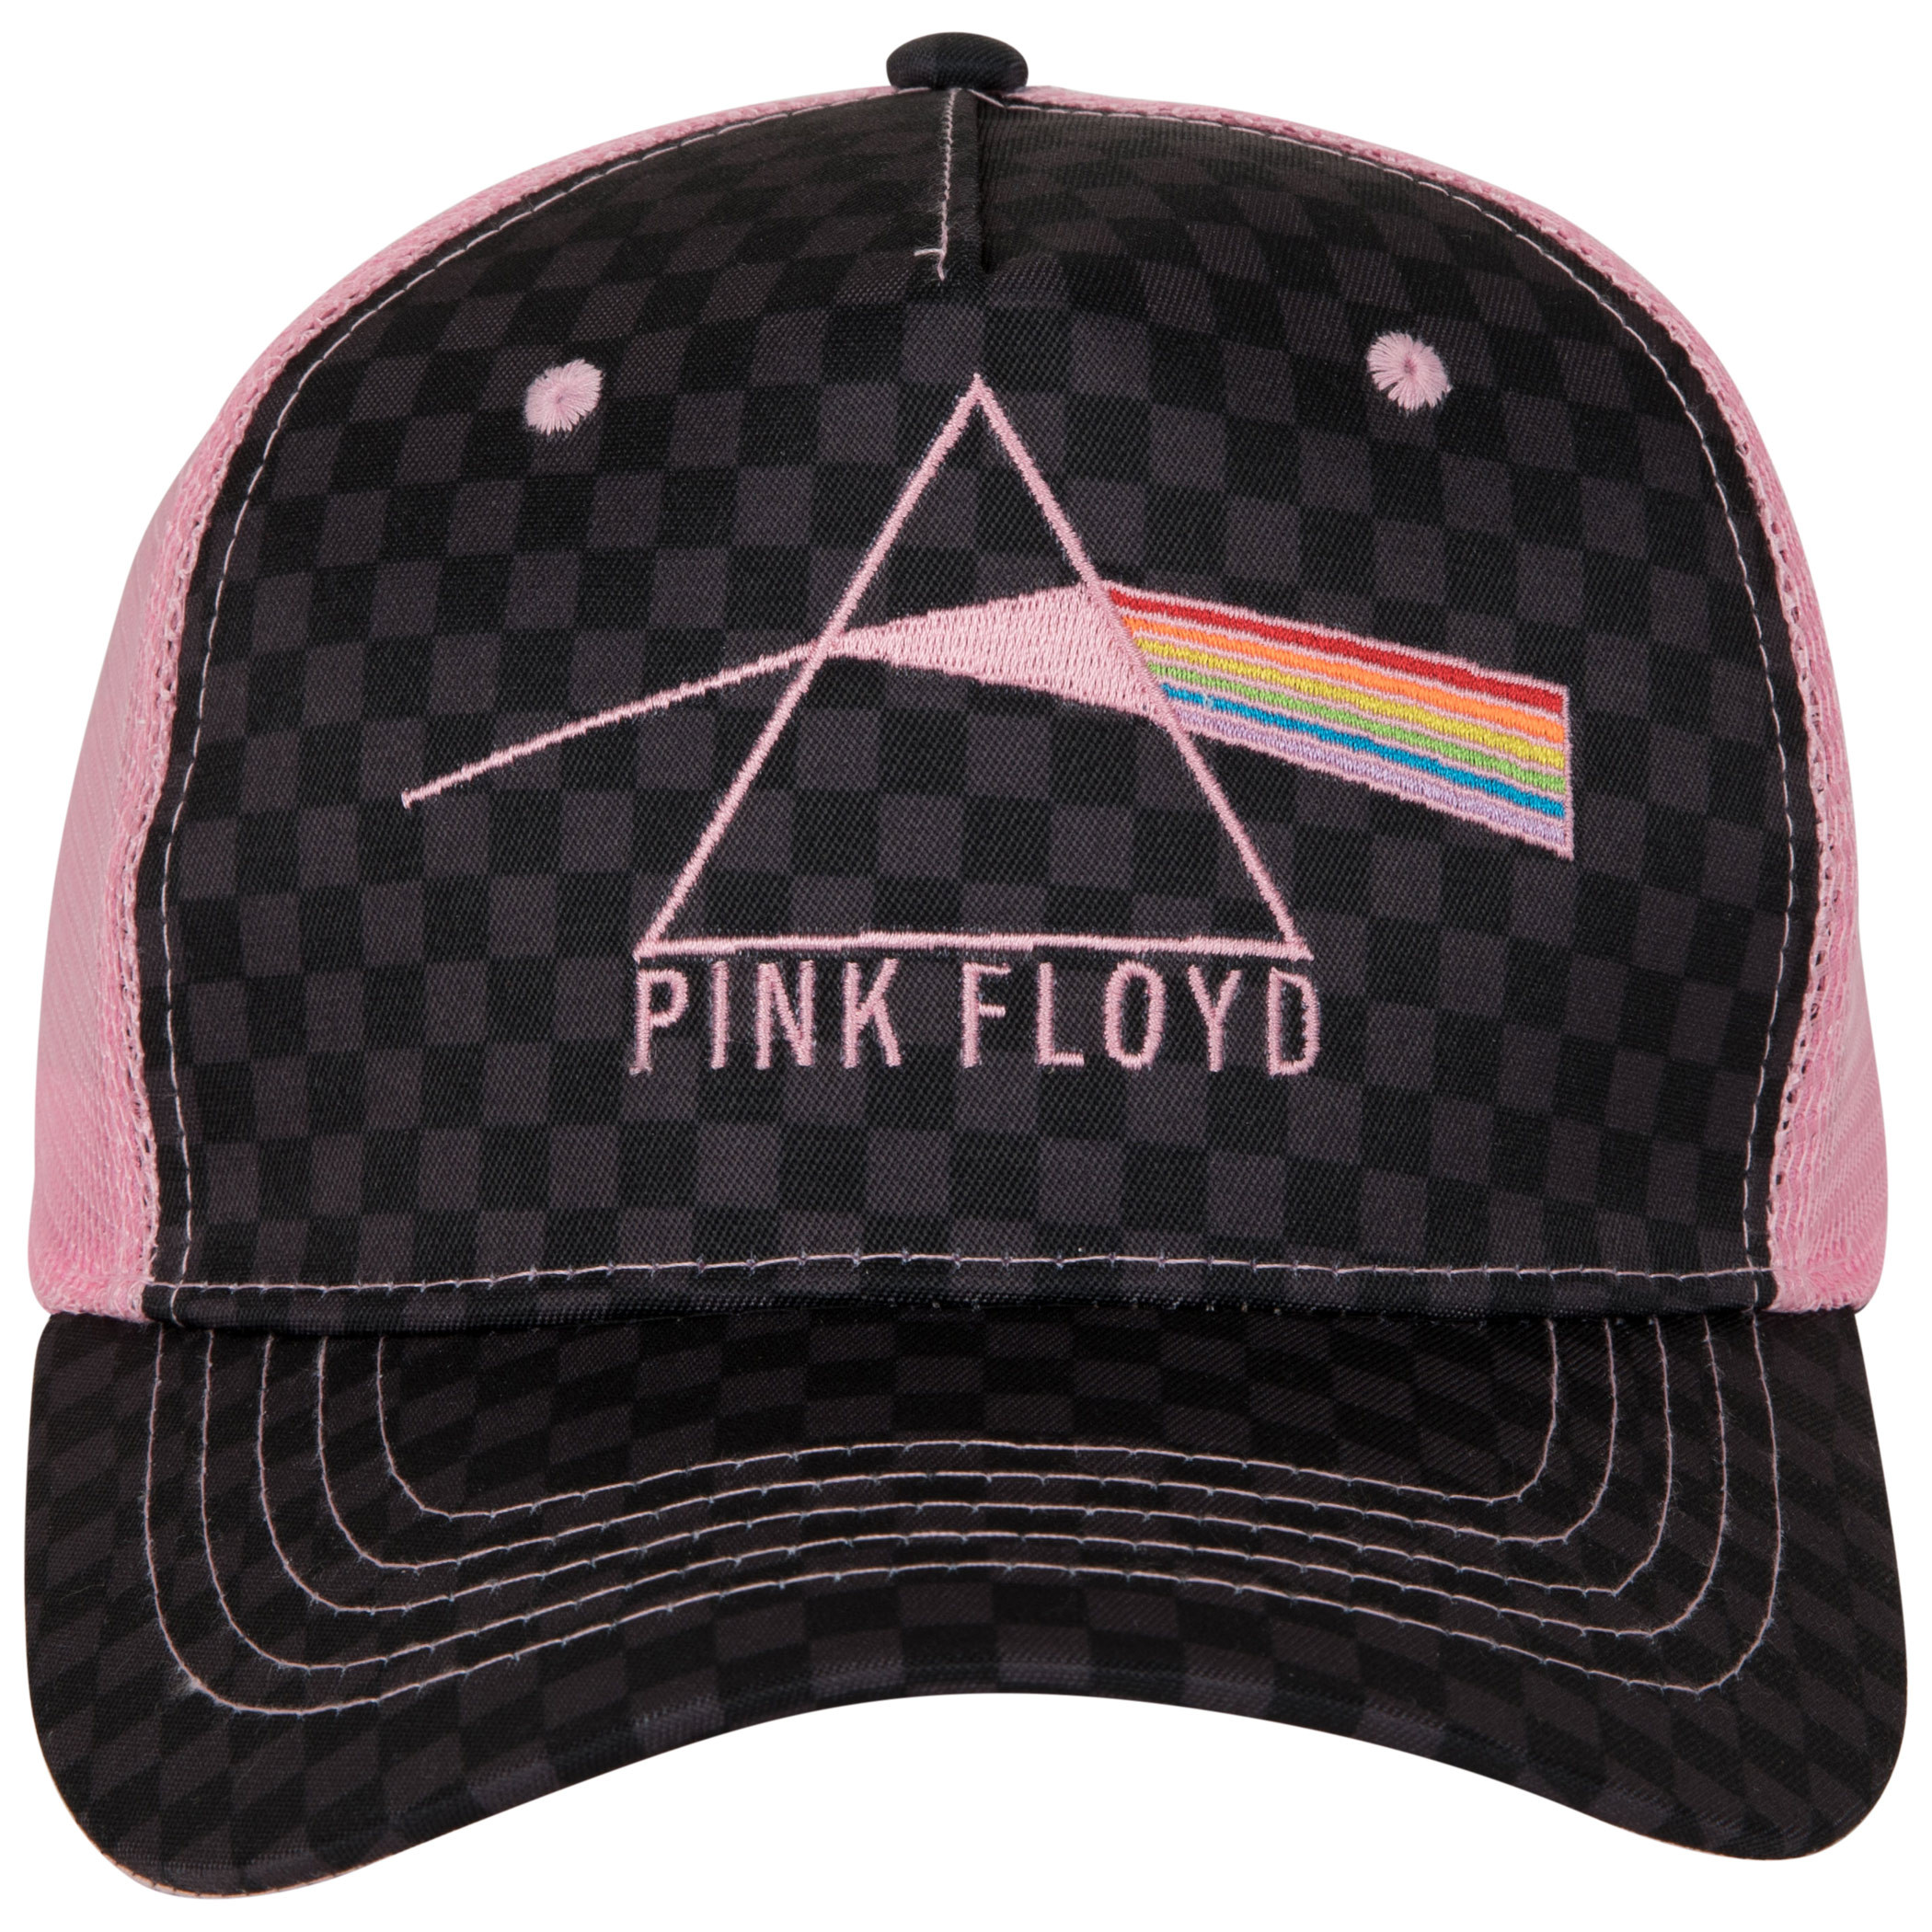 Pink Floyd The Dark Side of The Moon Snapback Trucker Hat